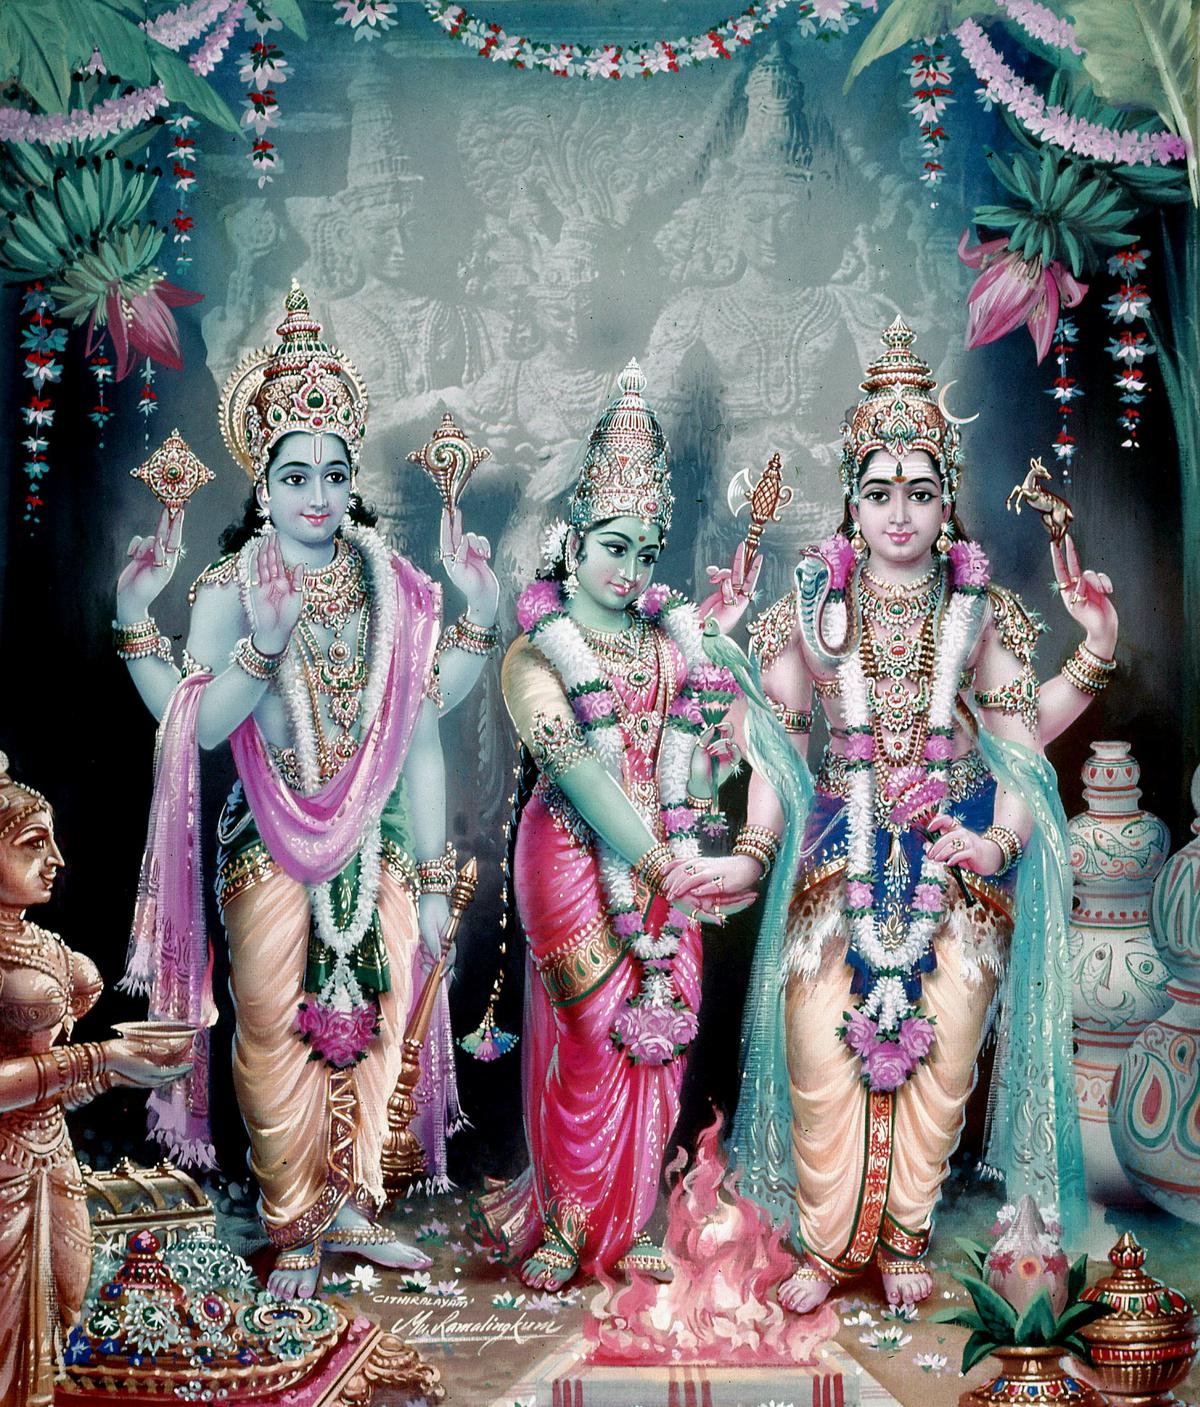 A scene depicting Meenakshi Kalyanam